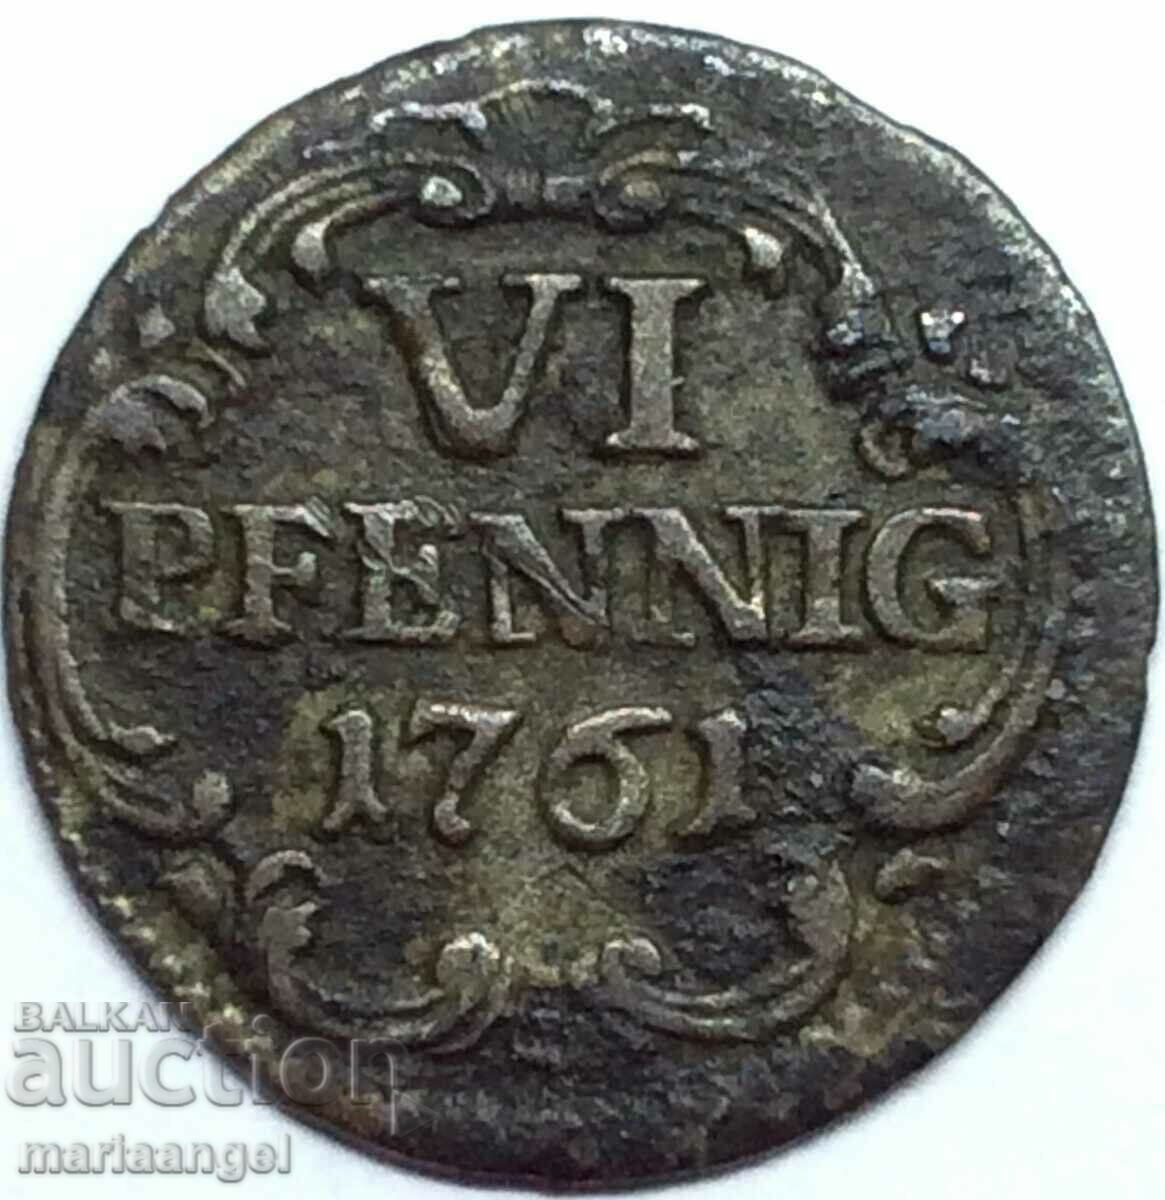 6 Pfennig 1761 Saxe-Albertine Line Germany - σπάνιο